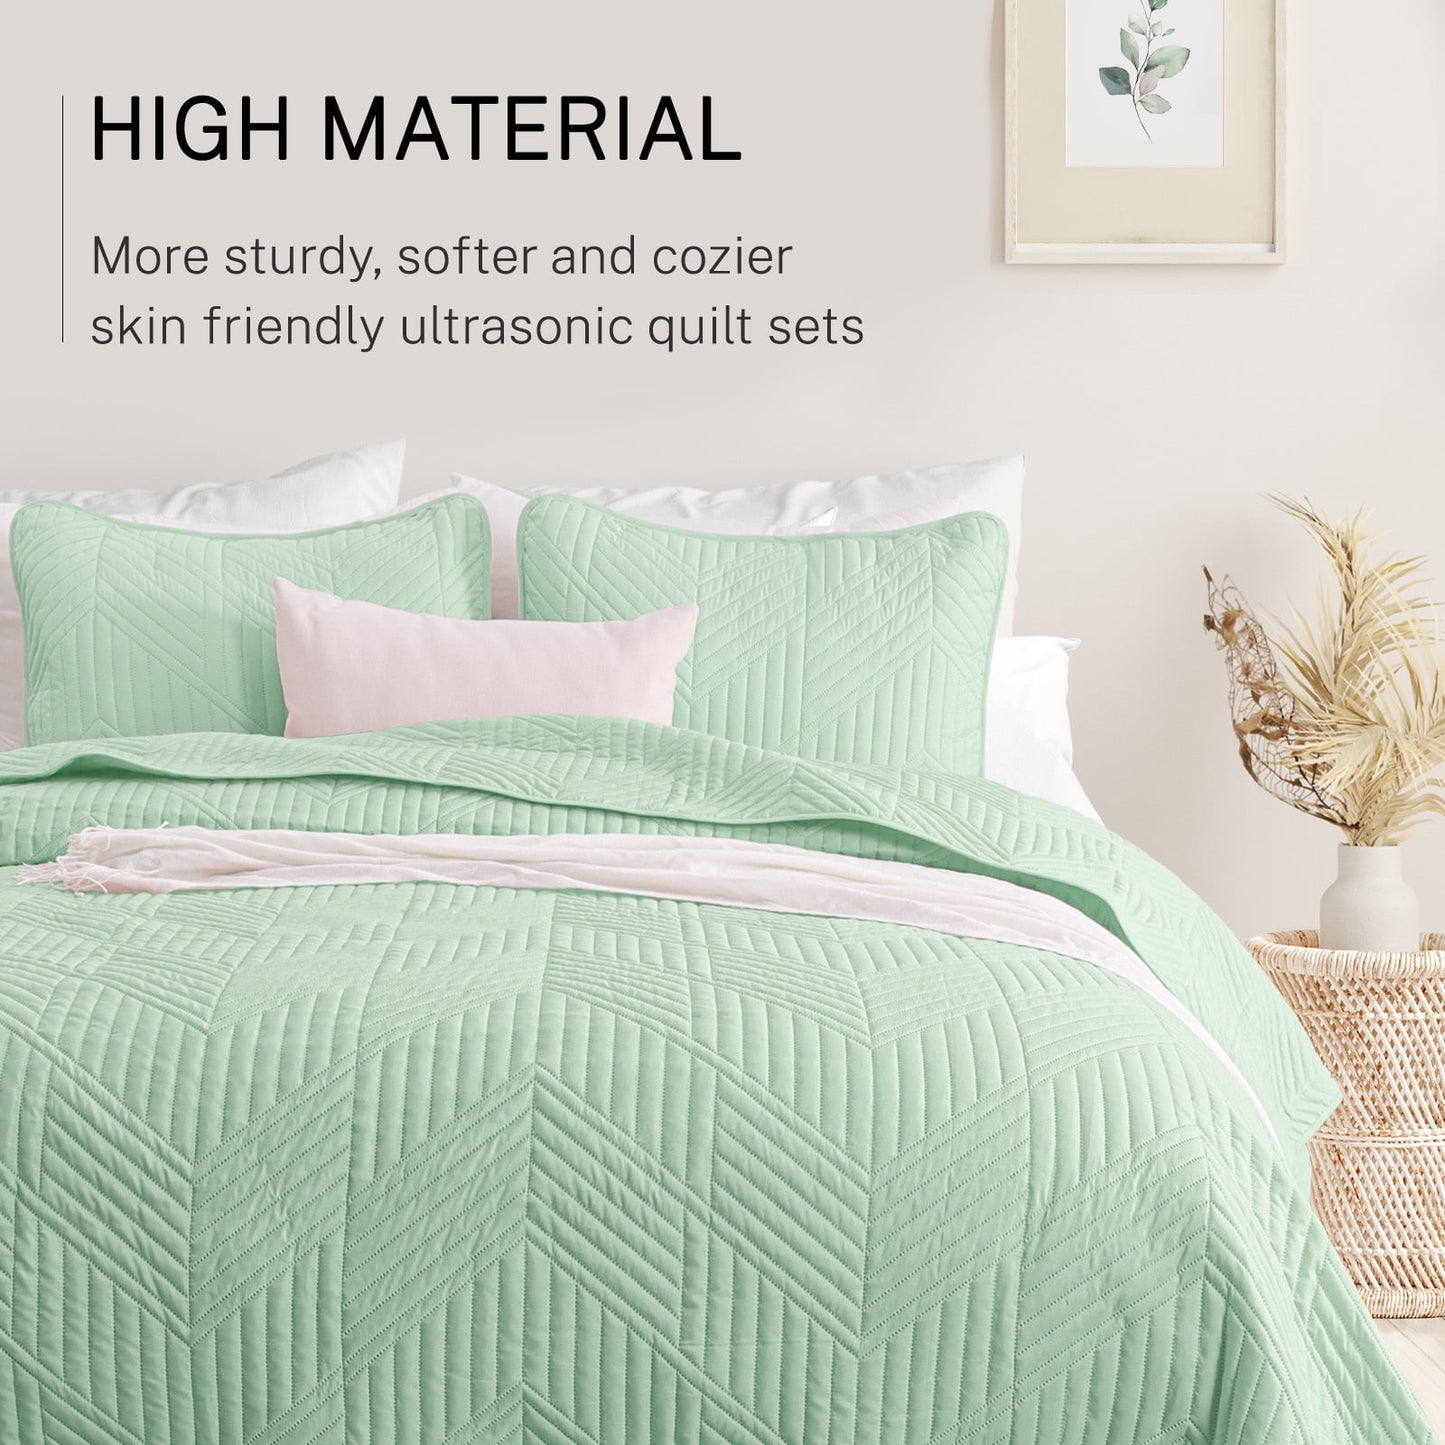 Exclusivo Mezcla California King Quilt Bedding Set, Lightweight Sage Green Oversized King Bedspreads Soft Modern Geometric Coverlet Set for All Seasons (1 Quilt and 2 Pillow Shams)